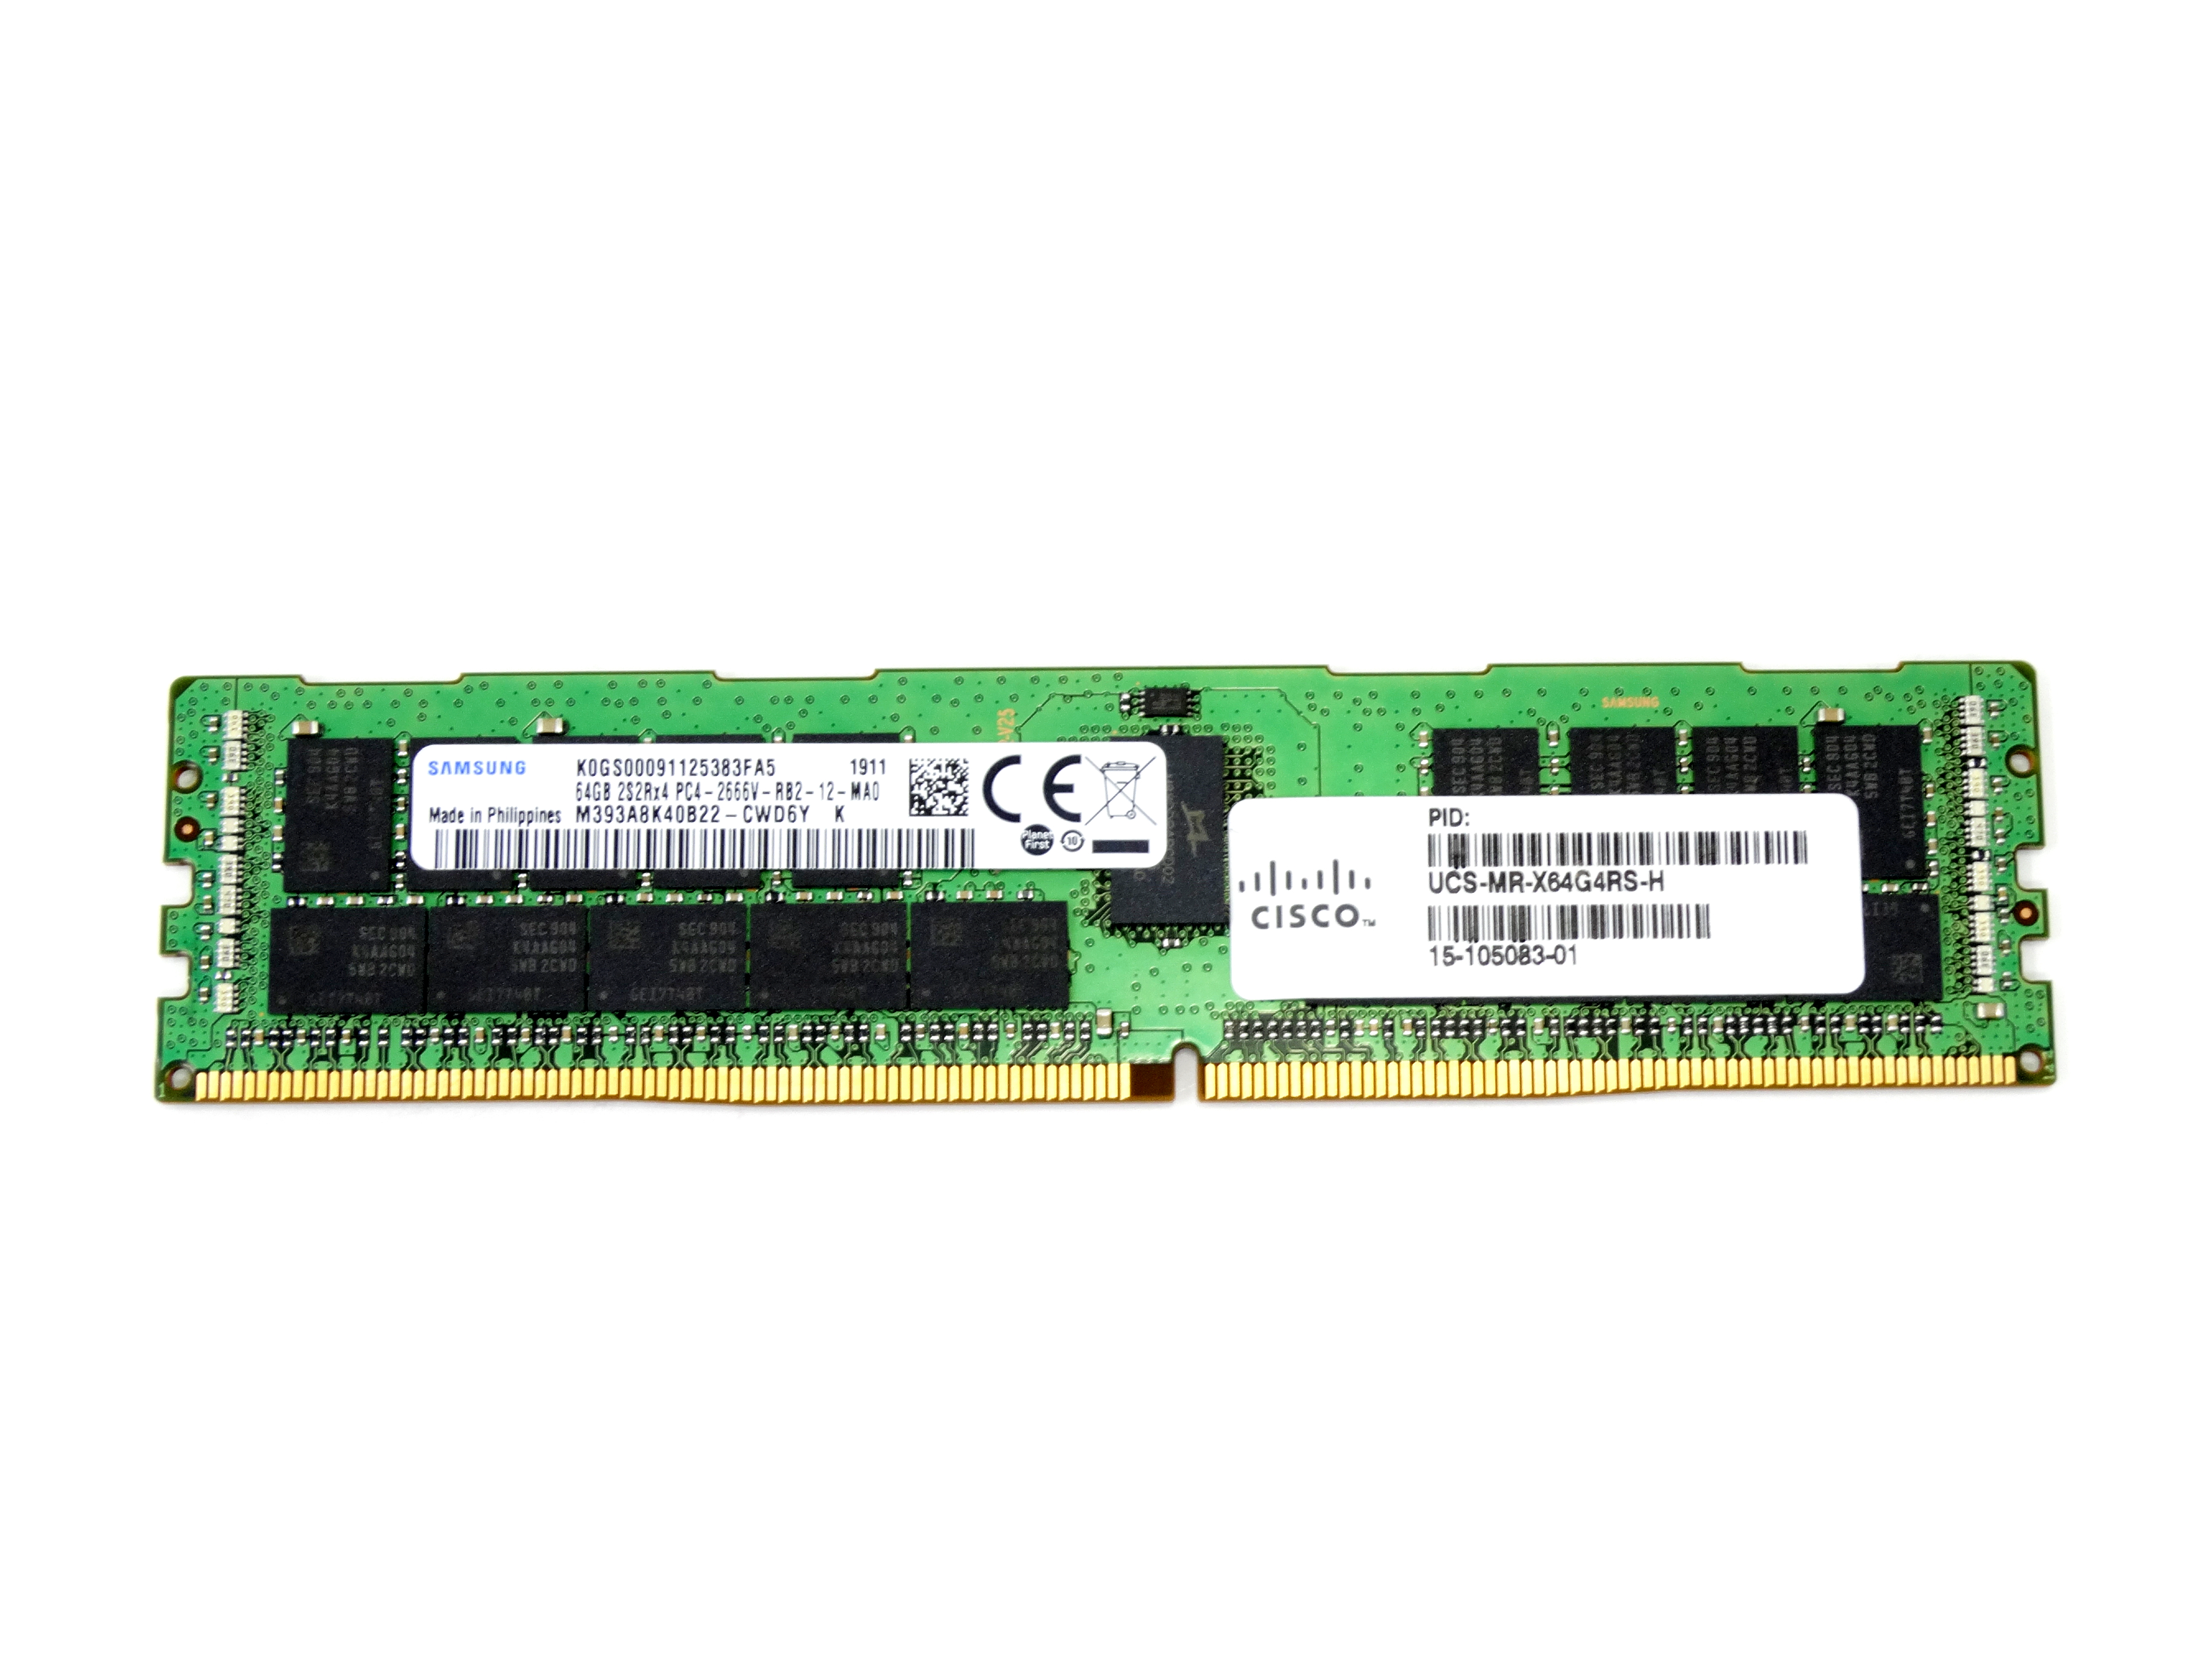 Cisco 64GB 2S2Rx4 PC4-2666V DDR4 ECC Registered SDRAM Quad Memory (M393A8K40B22-CWD6Q-3rdParty)